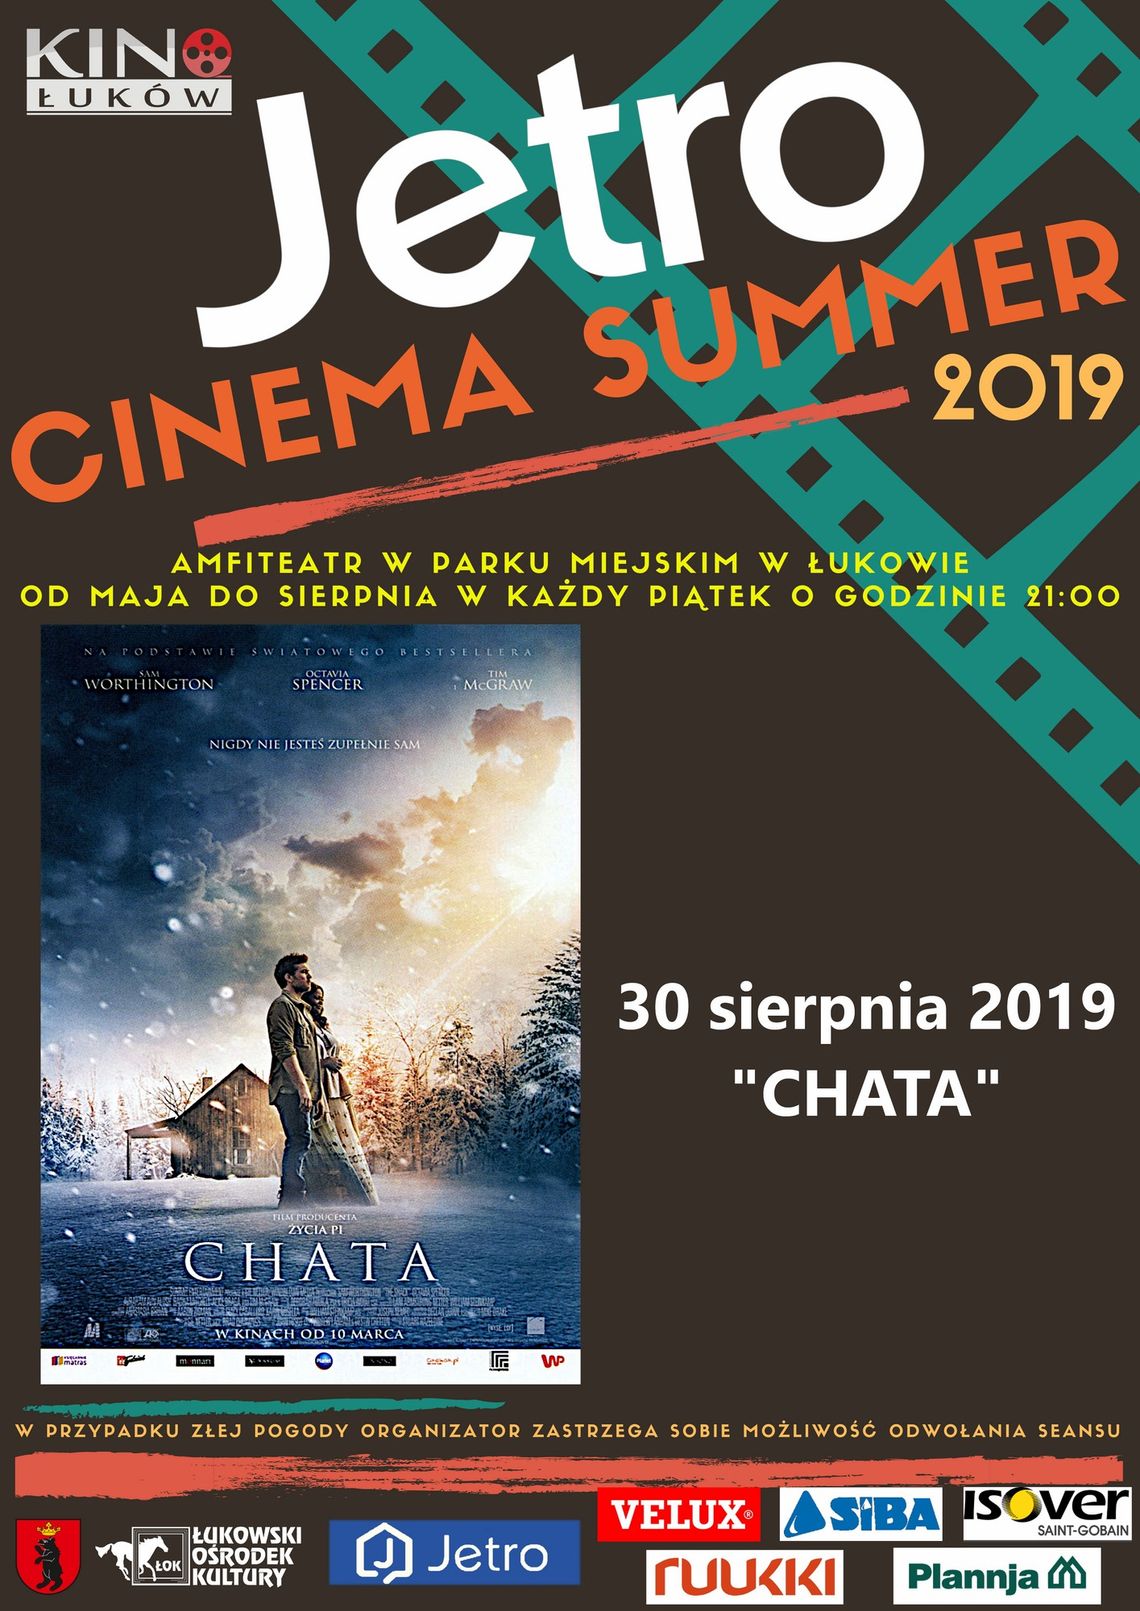 JETRO CINEMA SUMMER - „Chata” /30 sierpnia 2019